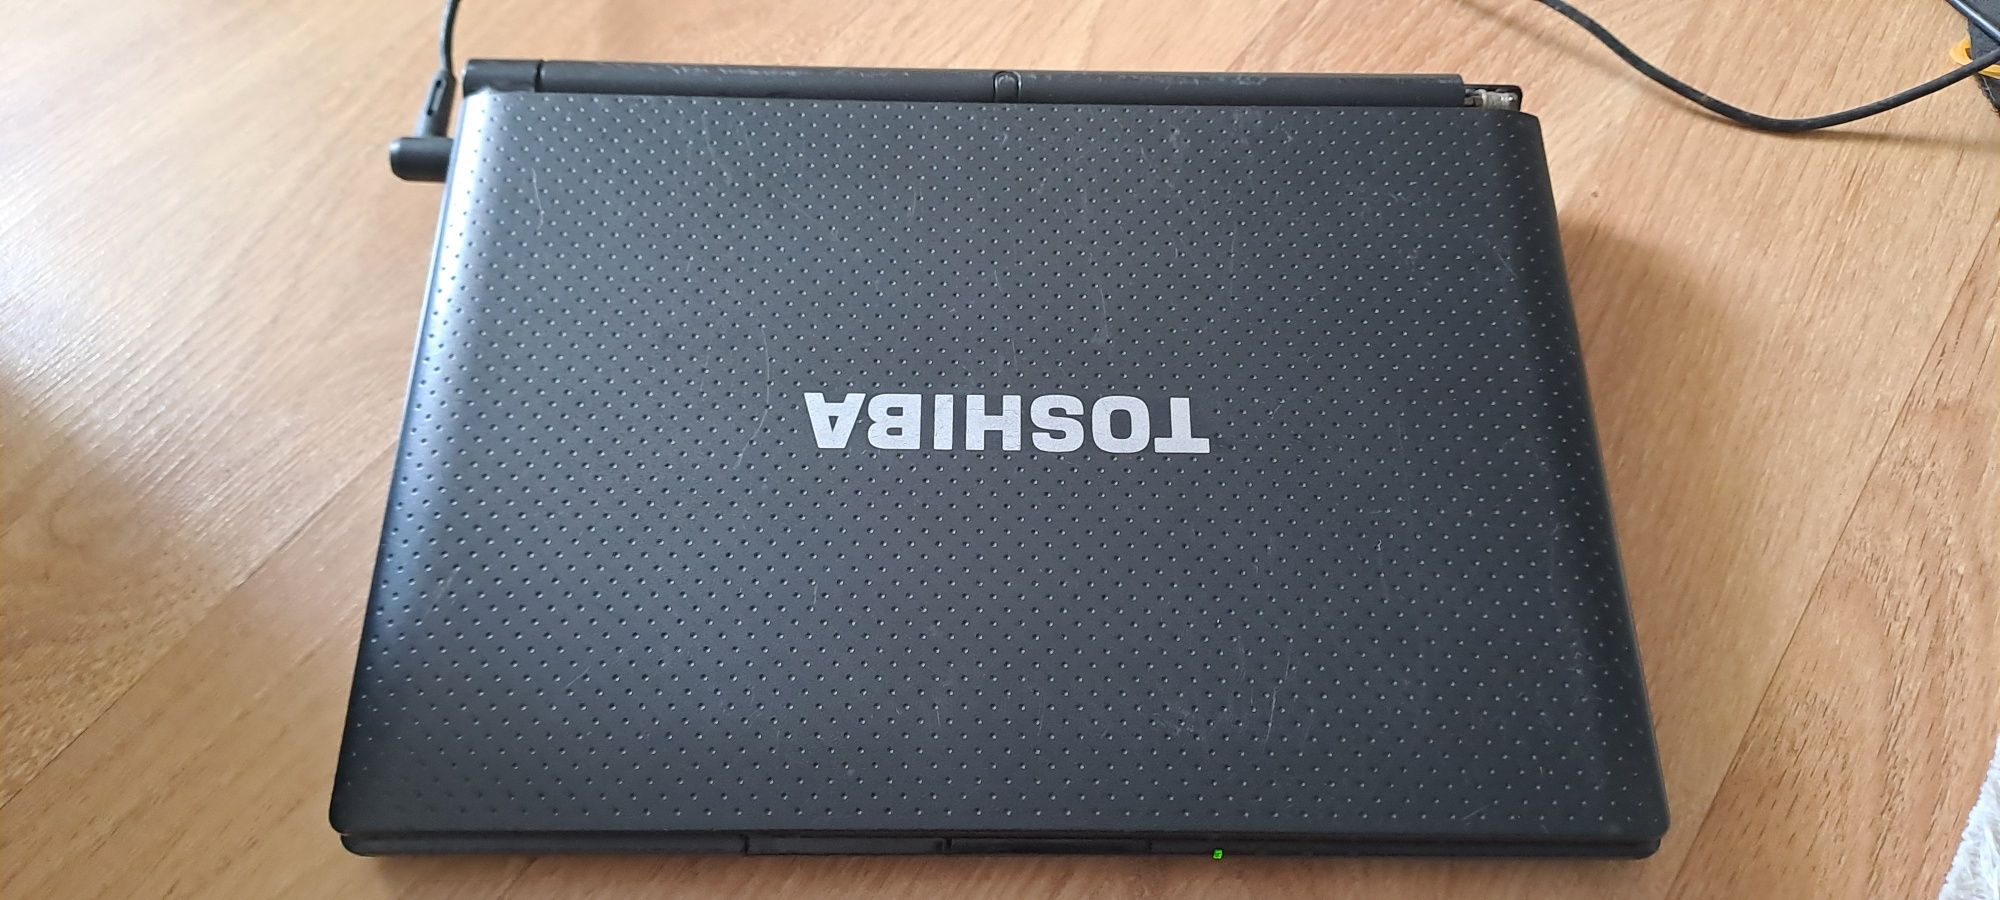 Notebook toshiba : 10.1 inch / 2 gb ram / 320 gb hard